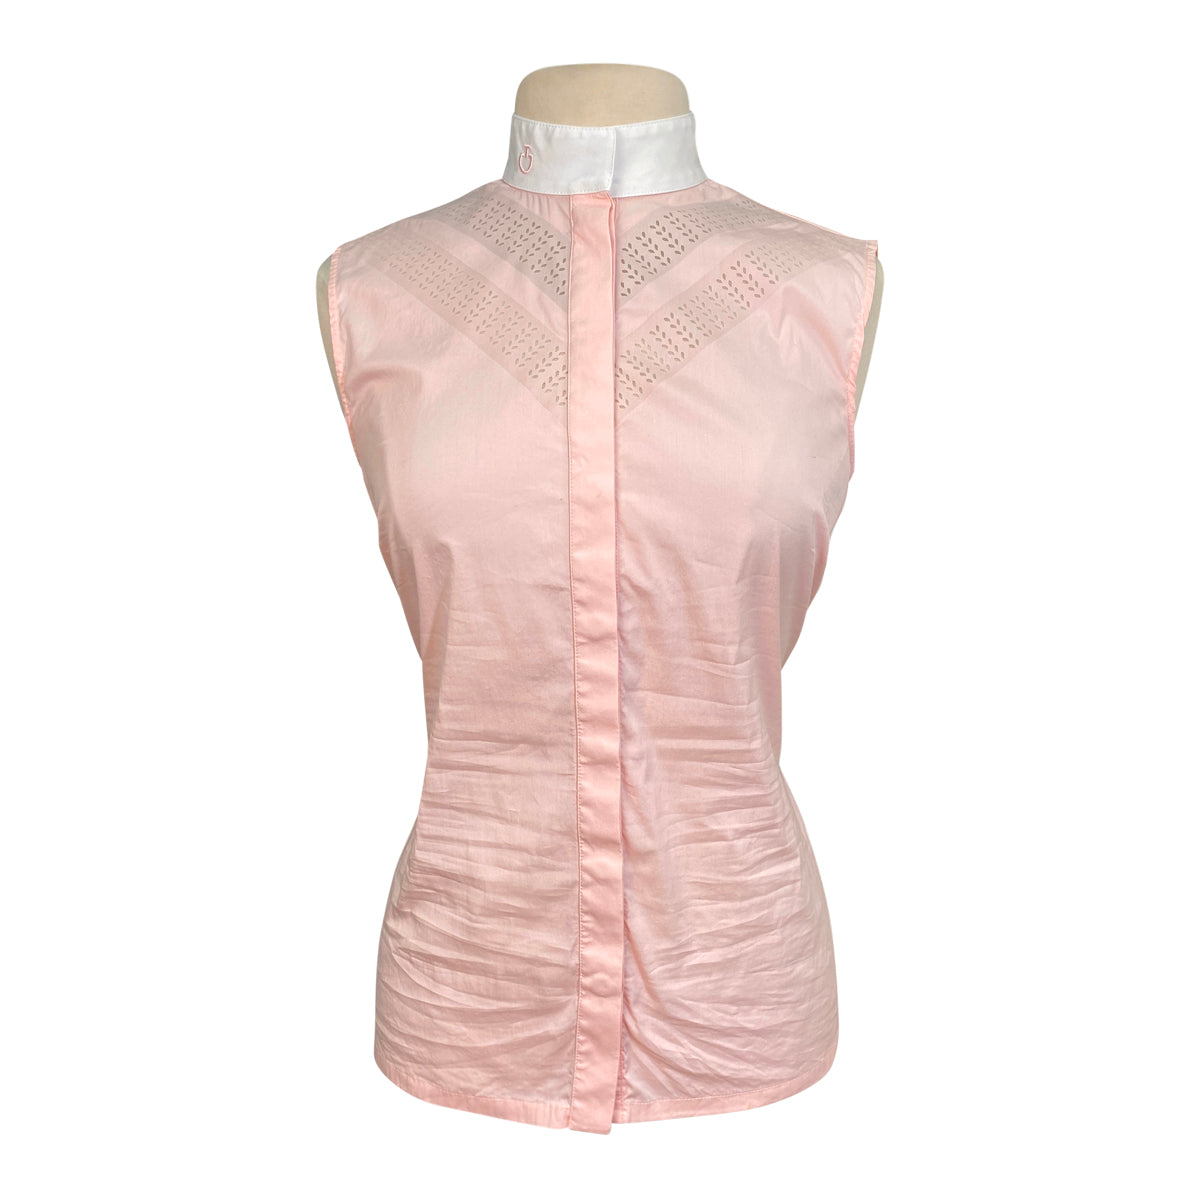 Cavalleria Toscana Sleeveless Show Shirt in Pink